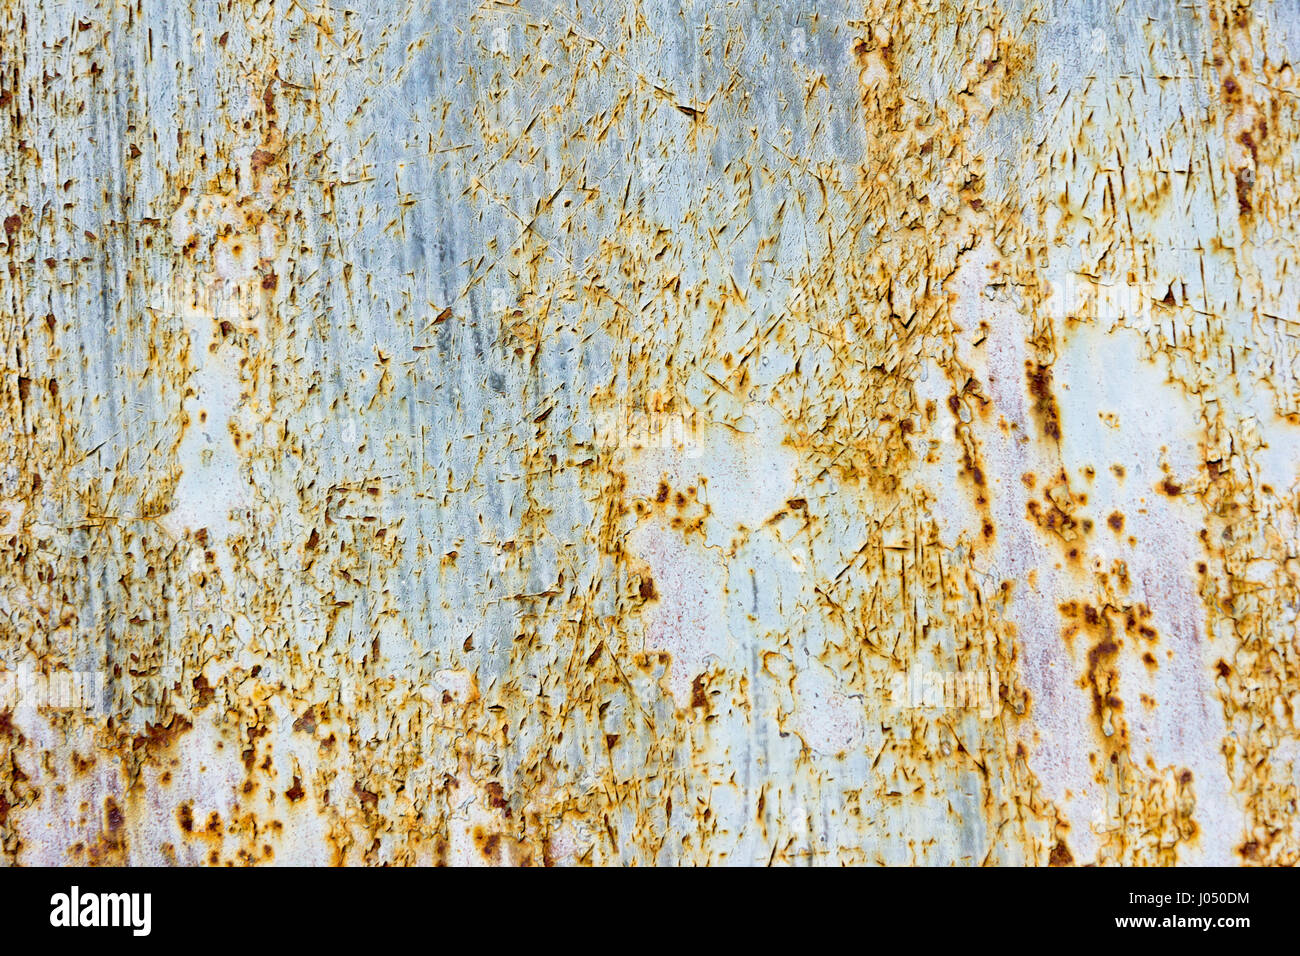 Peeling rusty metal texture Stock Photo